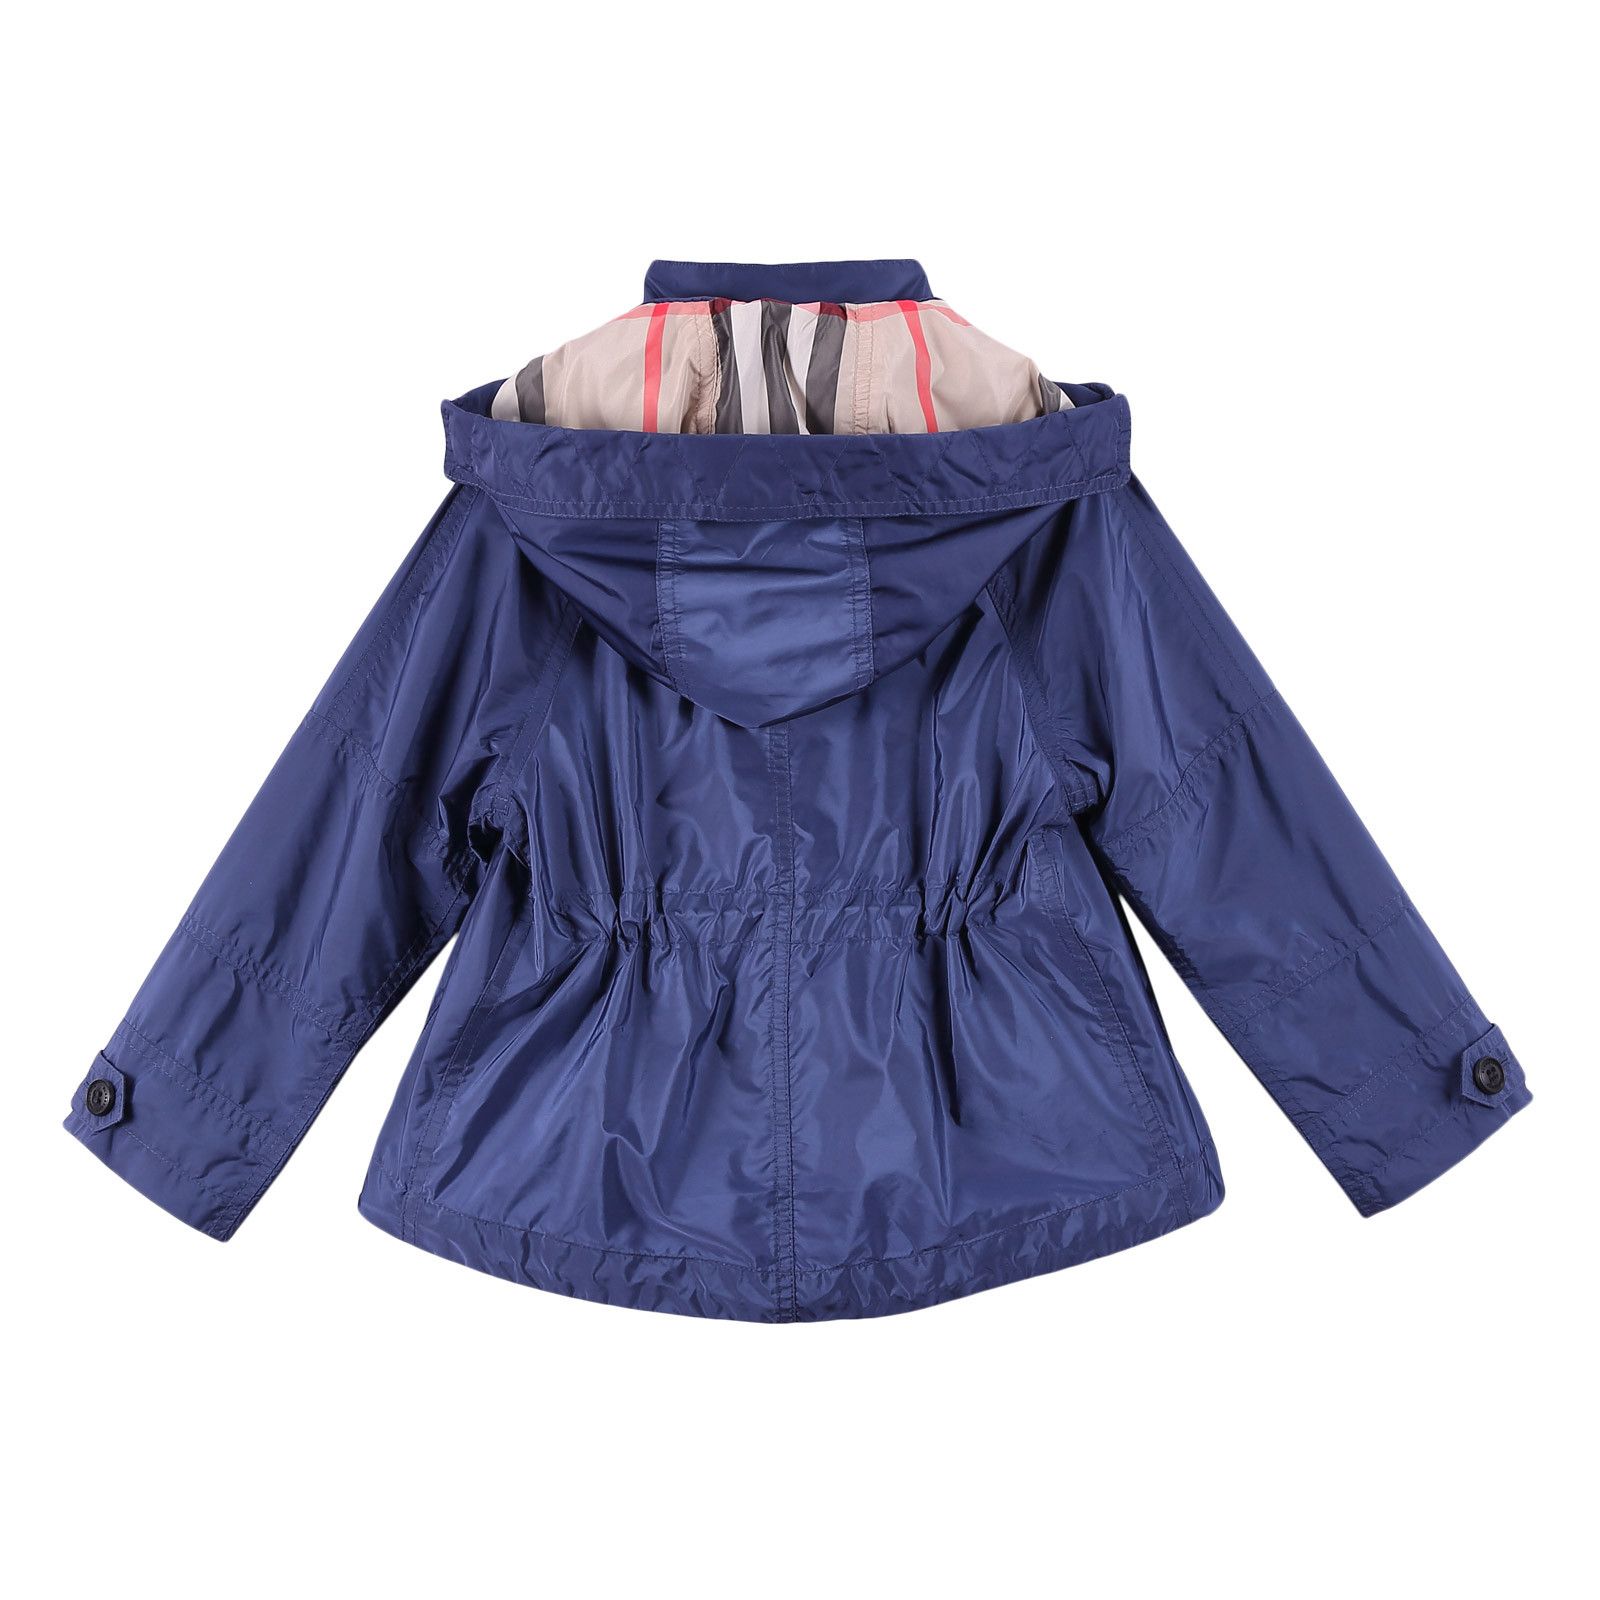 Boys Purple Hooded Cotton Jacket - CÉMAROSE | Children's Fashion Store - 2